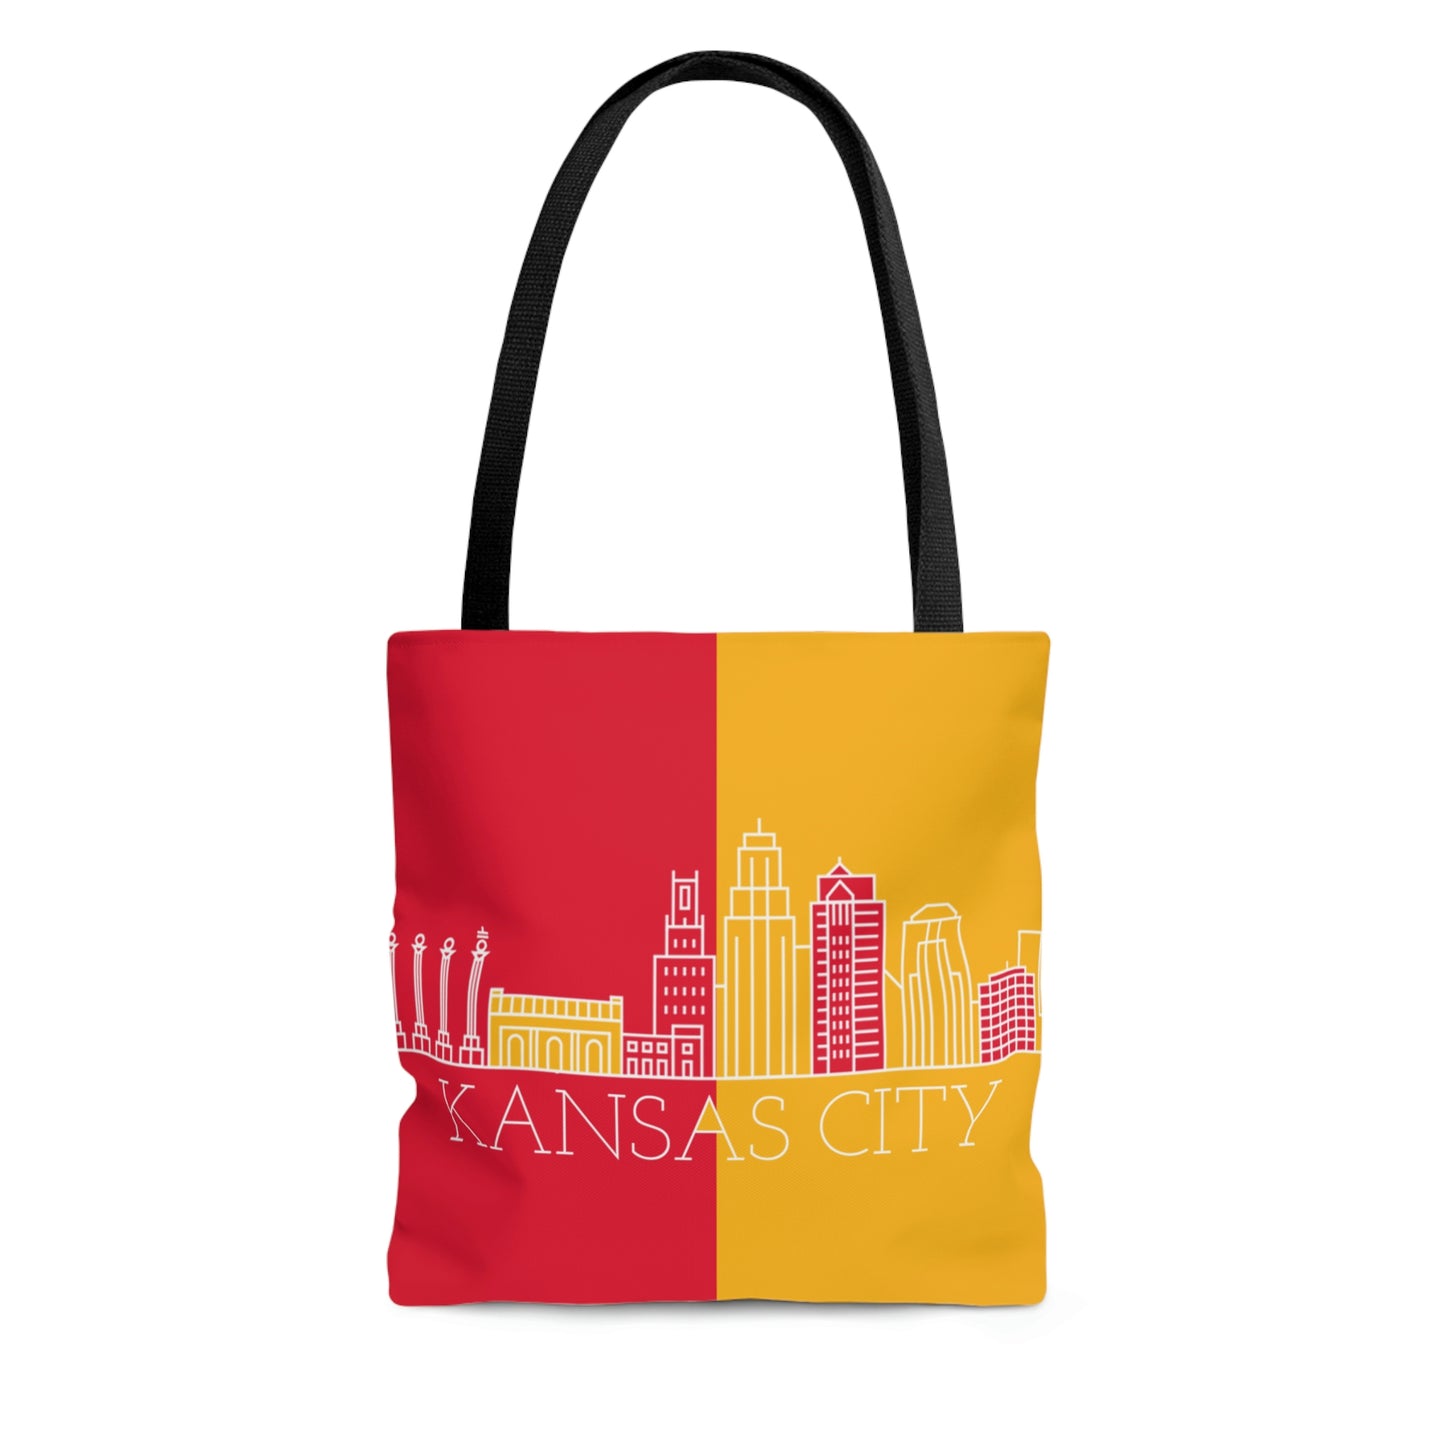 Kansas City - City series  - Tote Bag